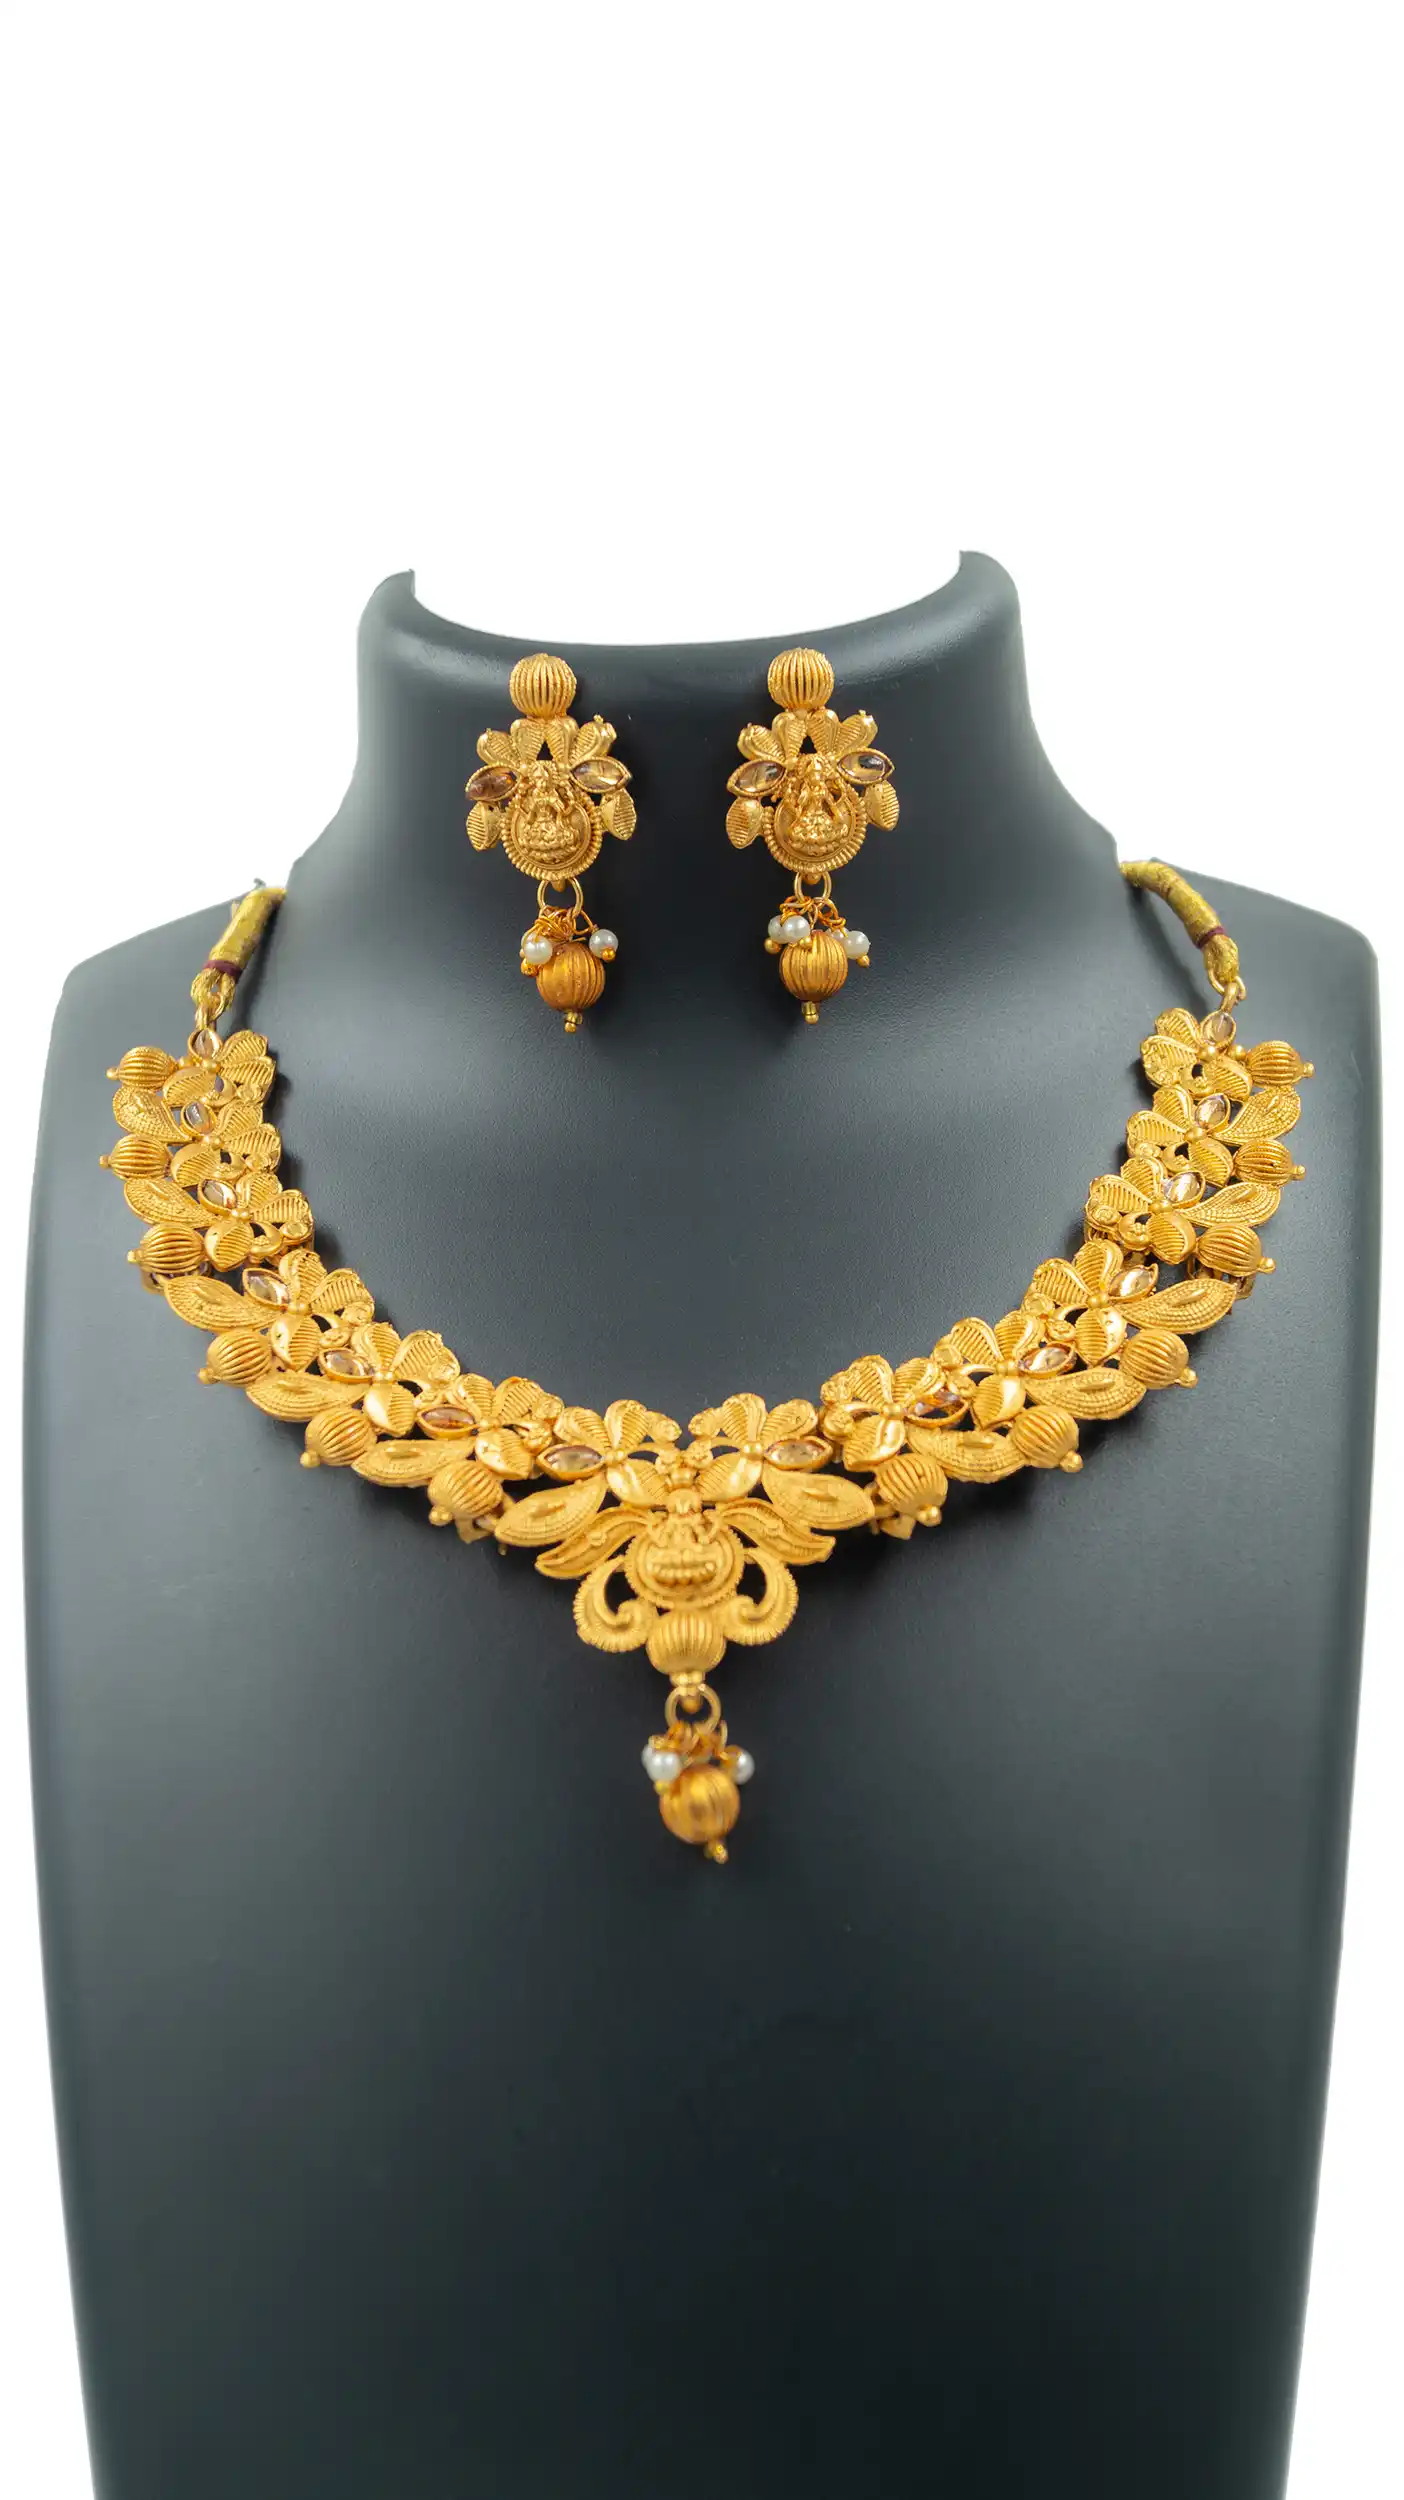 14k Women's Yellow Solid Diamond Cut Rope Necklace | LoveBling